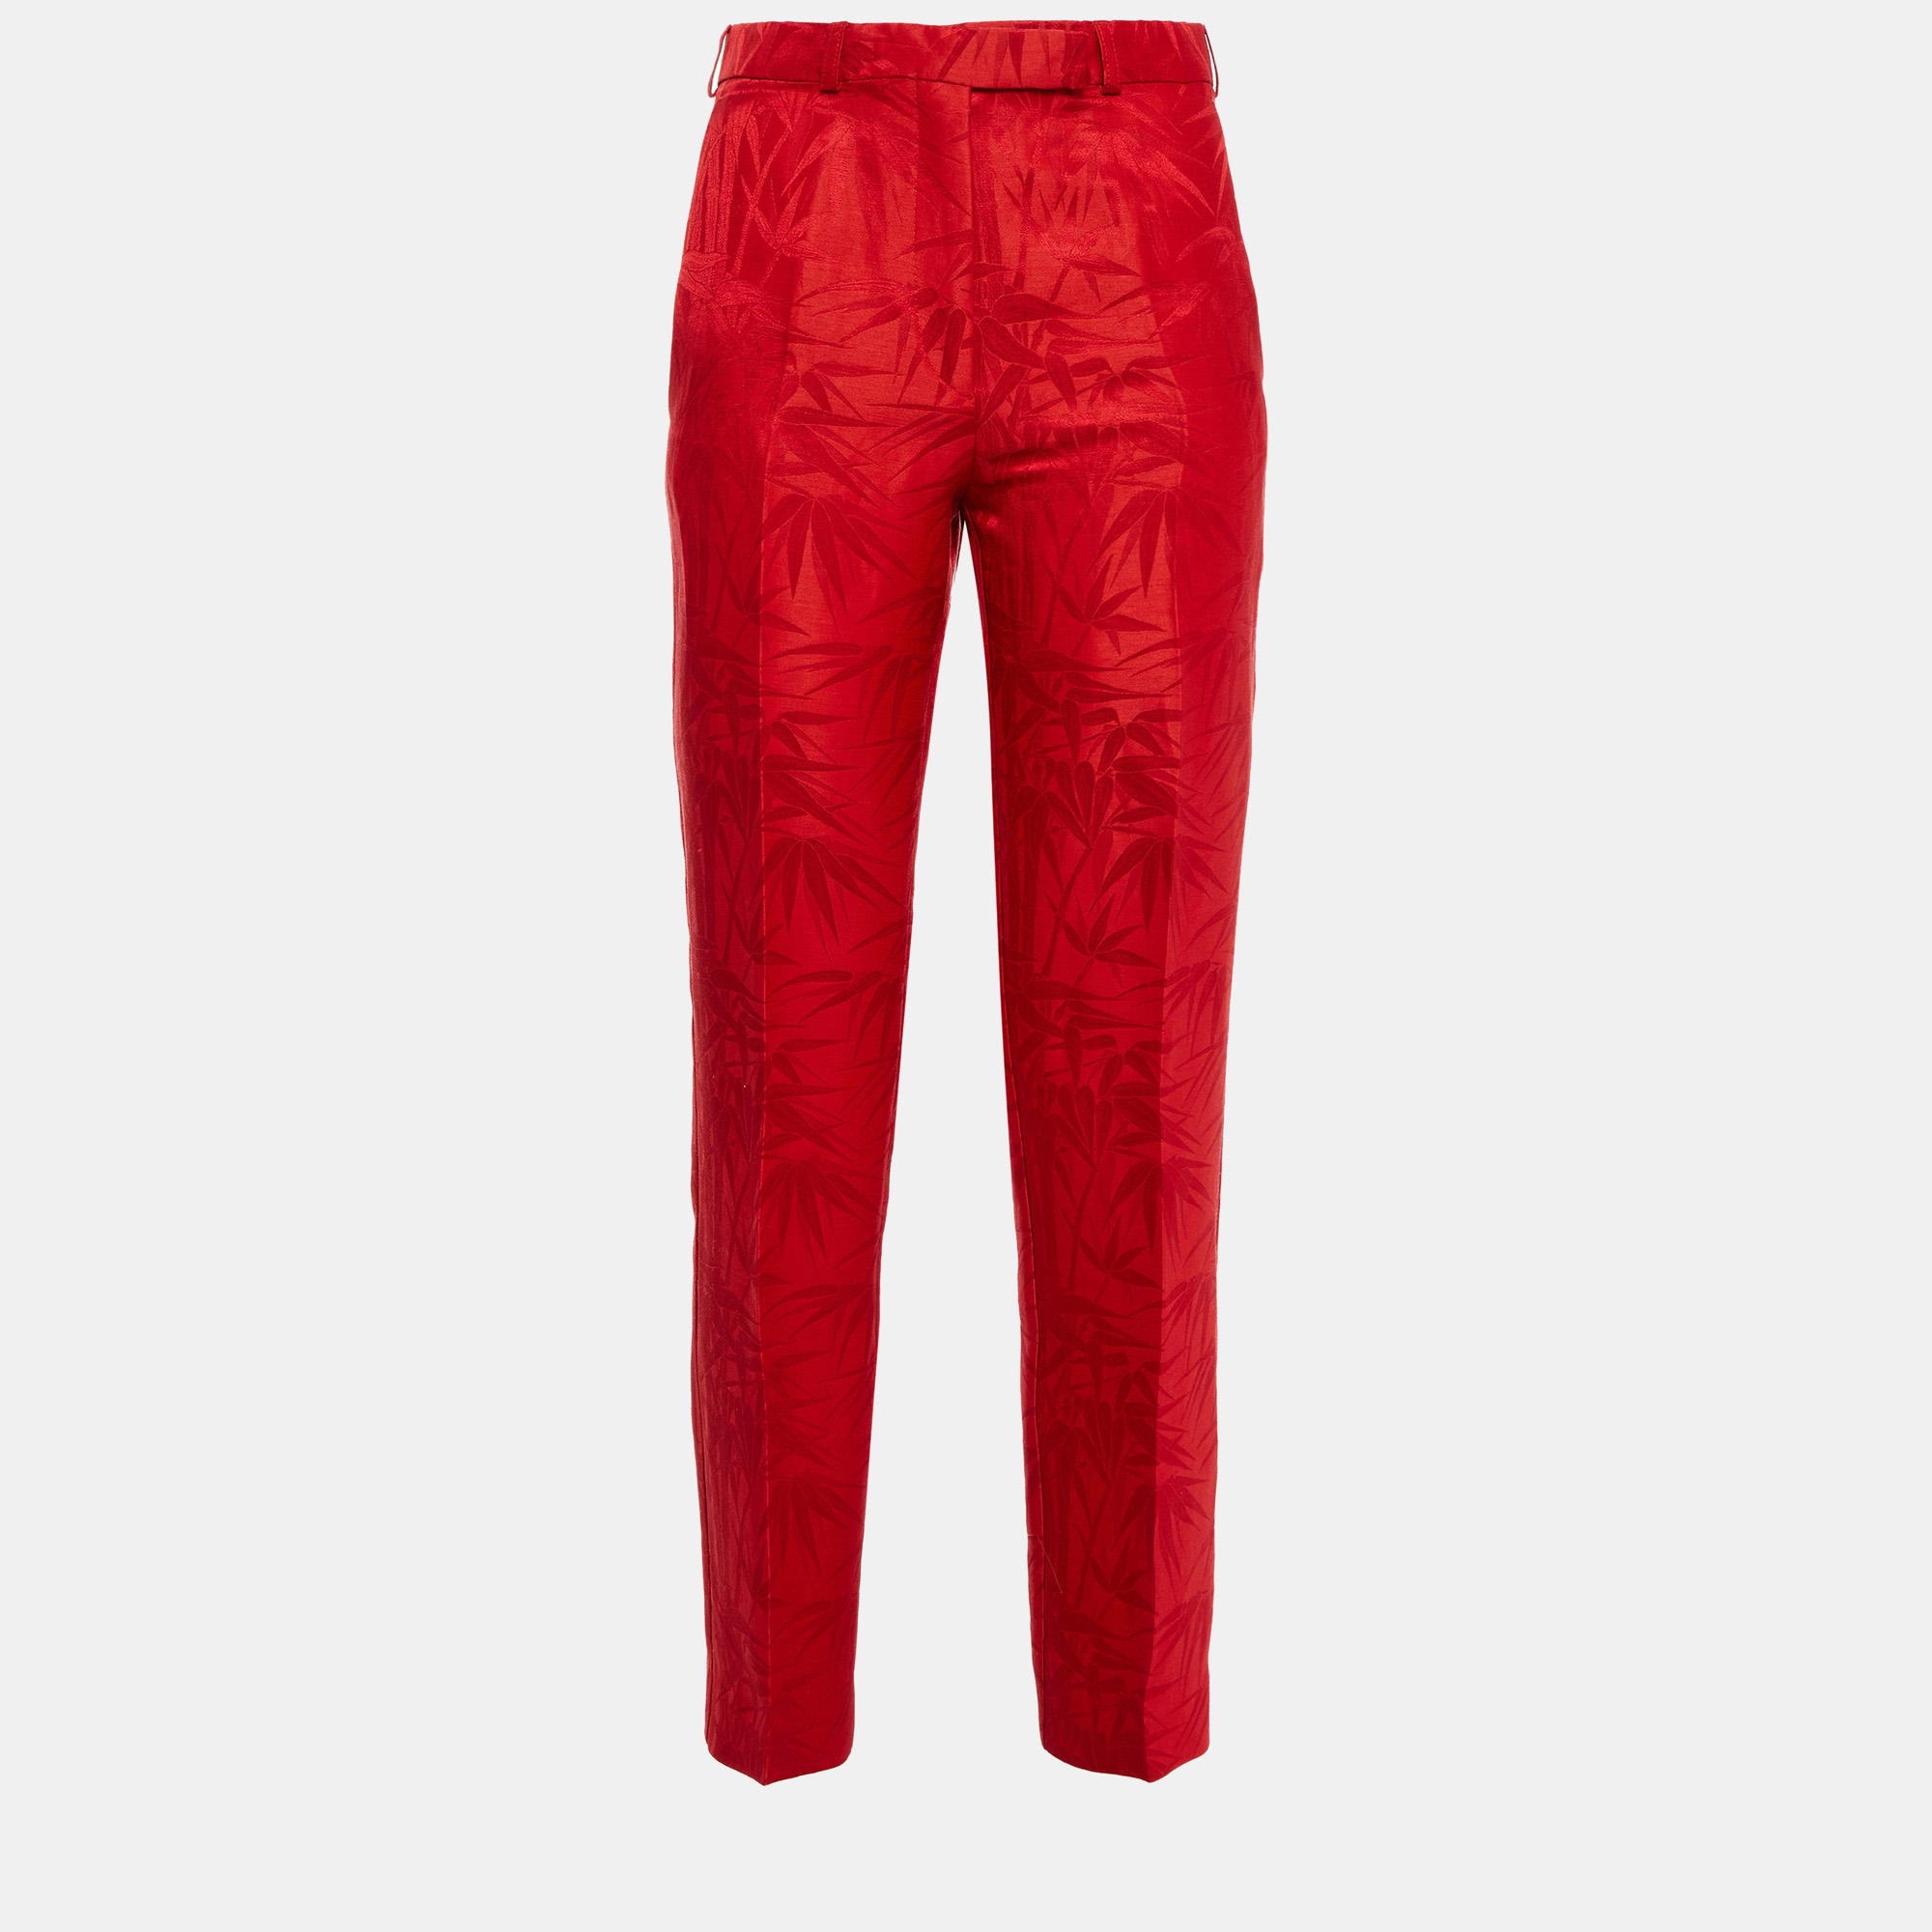 Etro red jacquard skinny leg pants m (it 42)